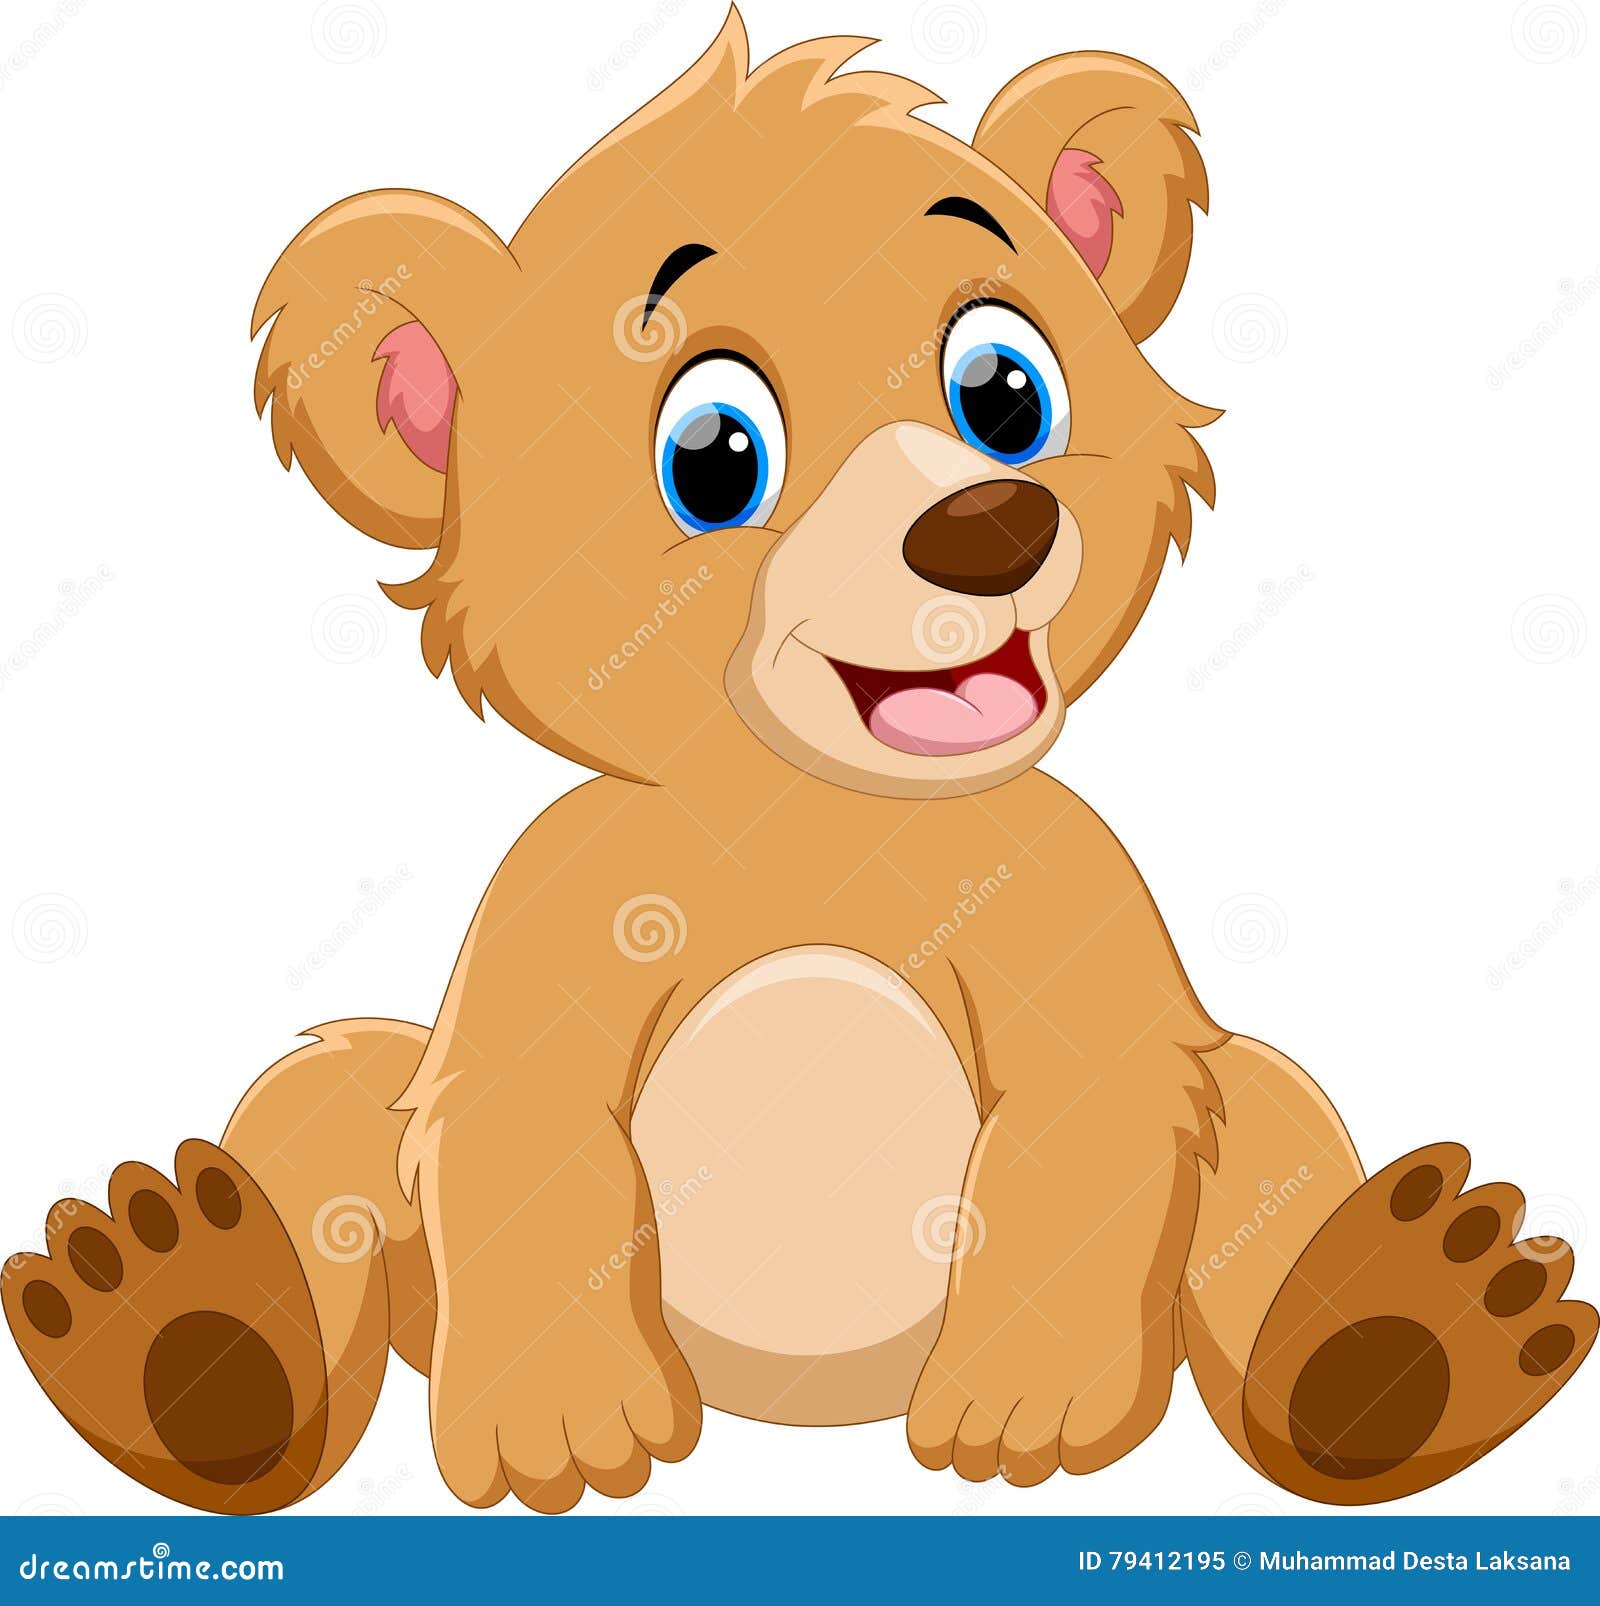 Cute baby bear cartoon stock illustration. Illustration of furry - 79412195